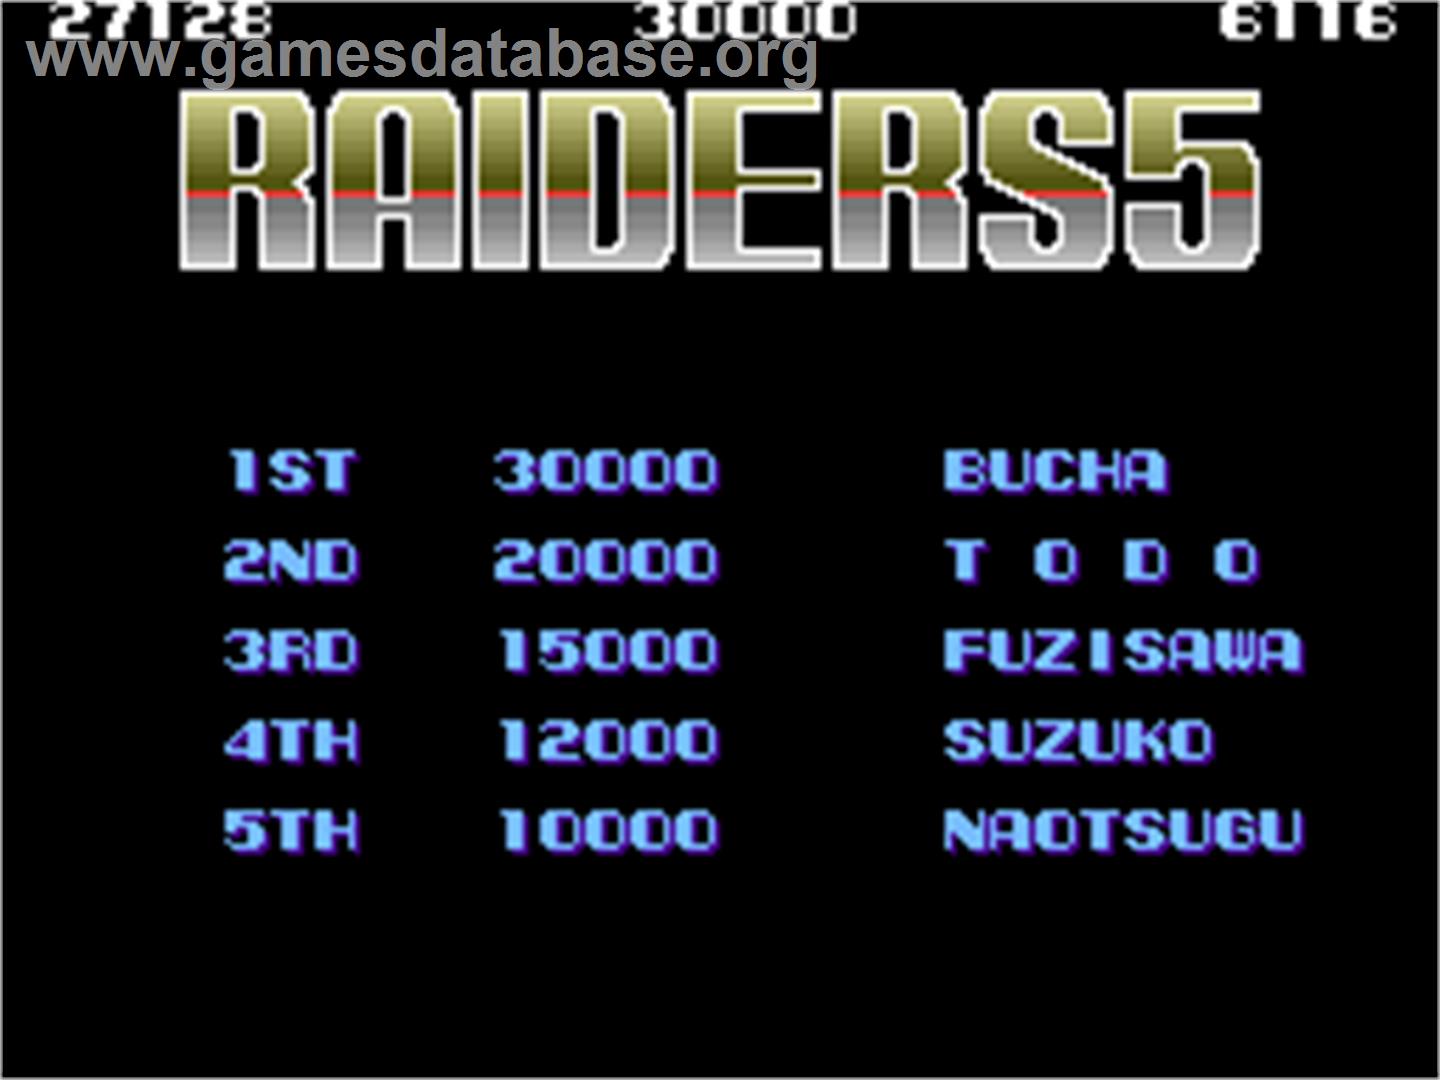 Raiders5 - Arcade - Artwork - High Score Screen